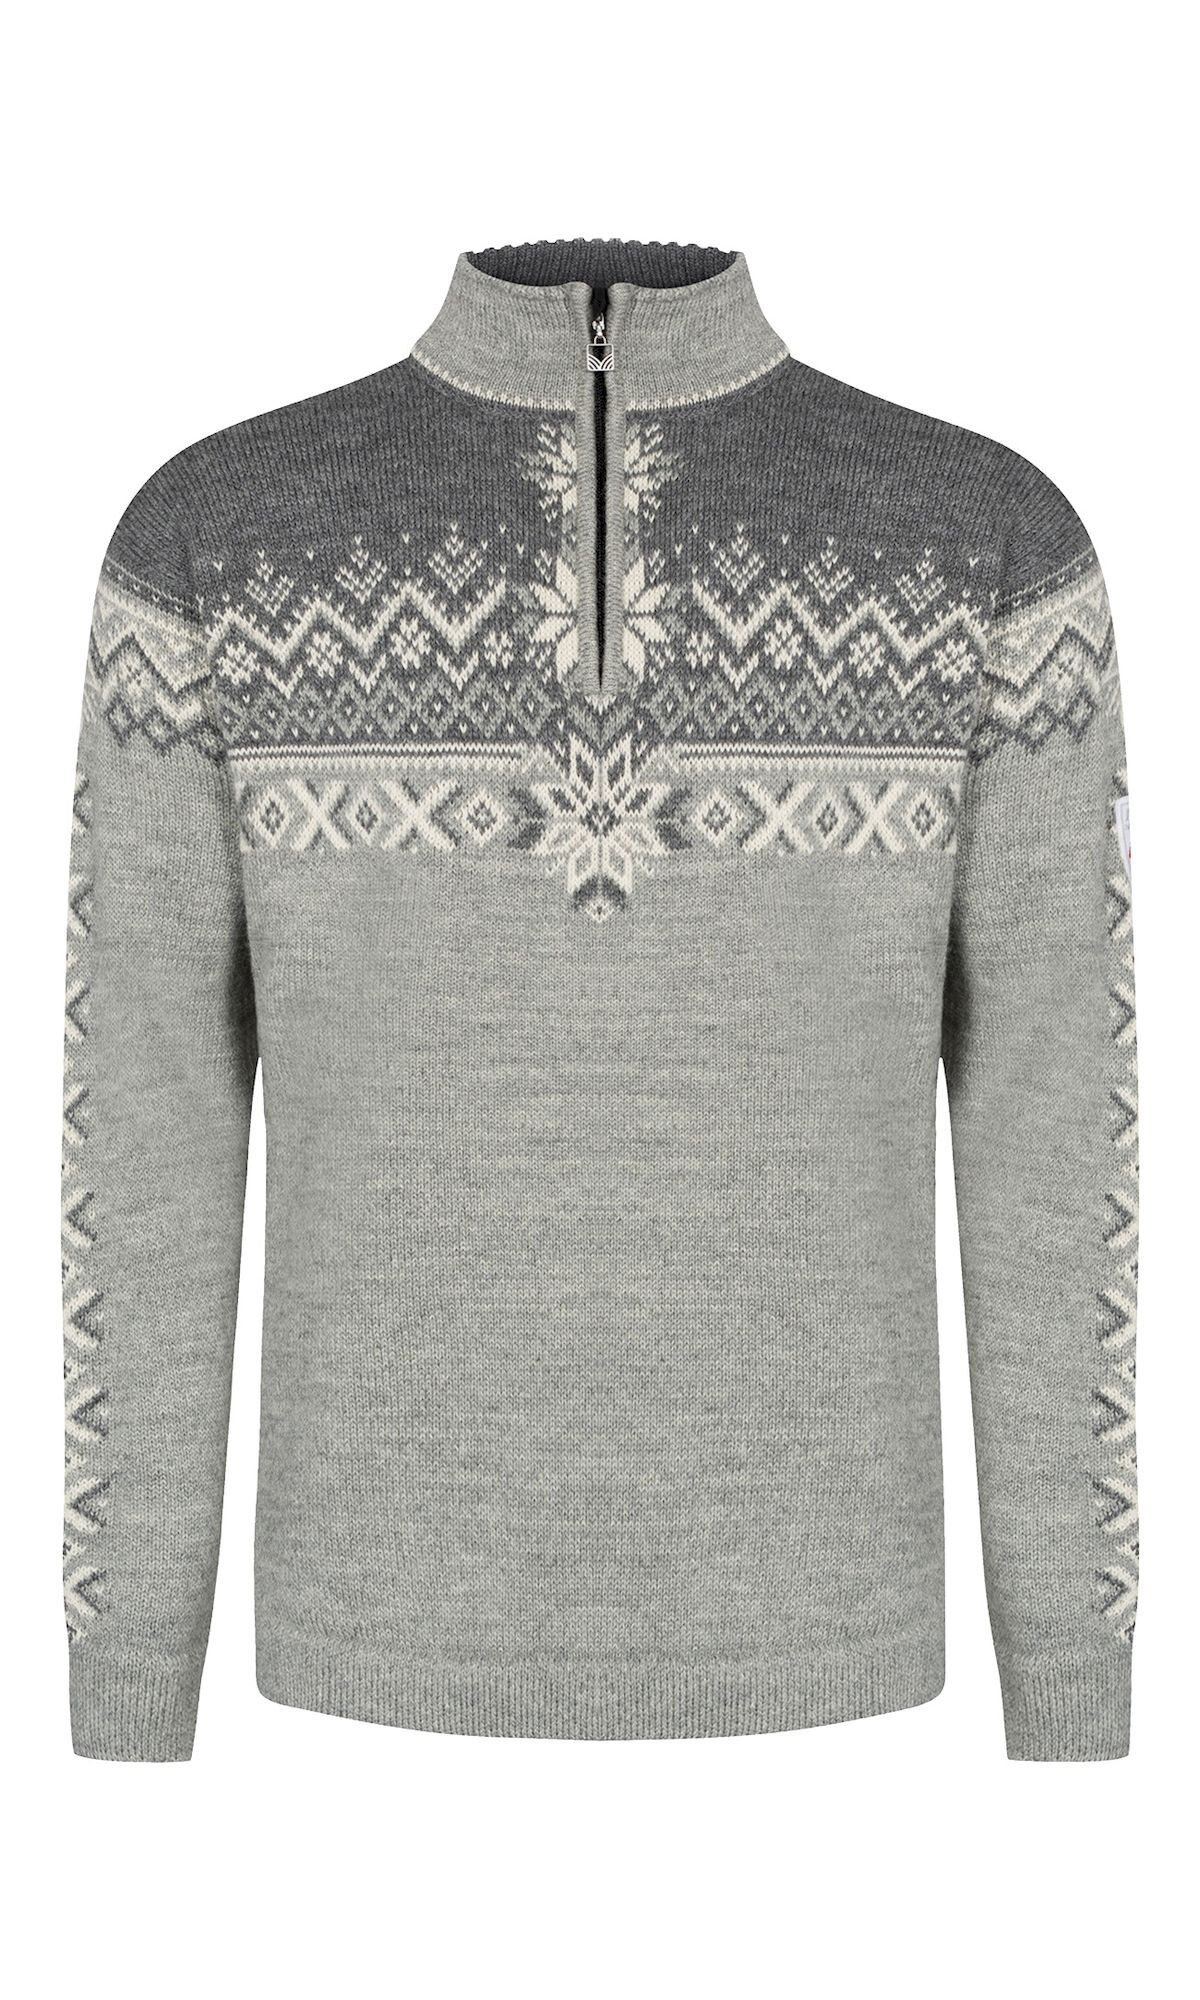 Dale of Norway 140th Anniversary Sweater - Pullover in lana merino - Uomo | Hardloop